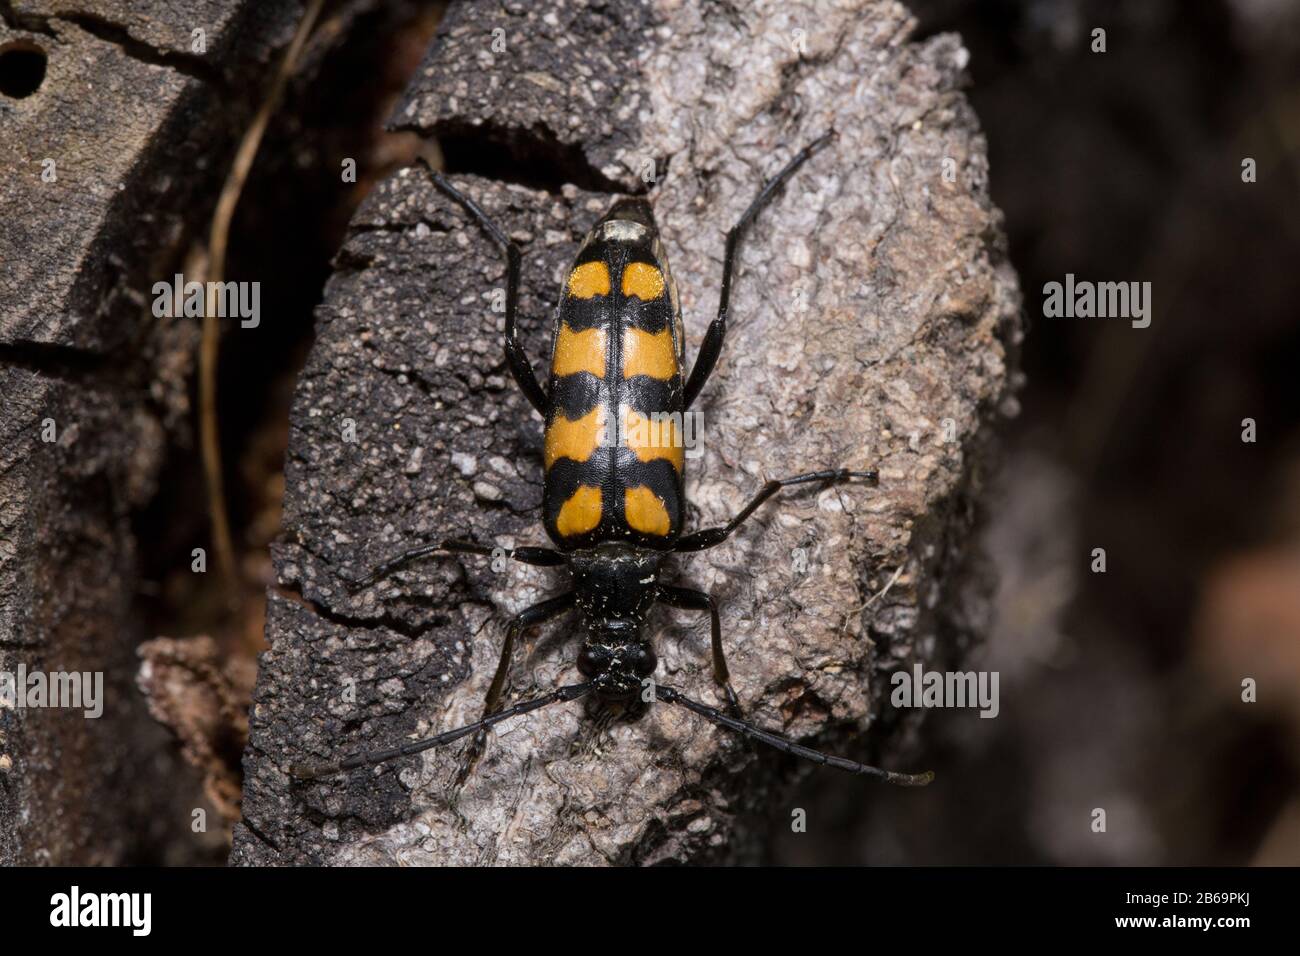 Black-yellow longhorn beetle is sitting on a tree stump. Wood beetle pest. Stock Photo